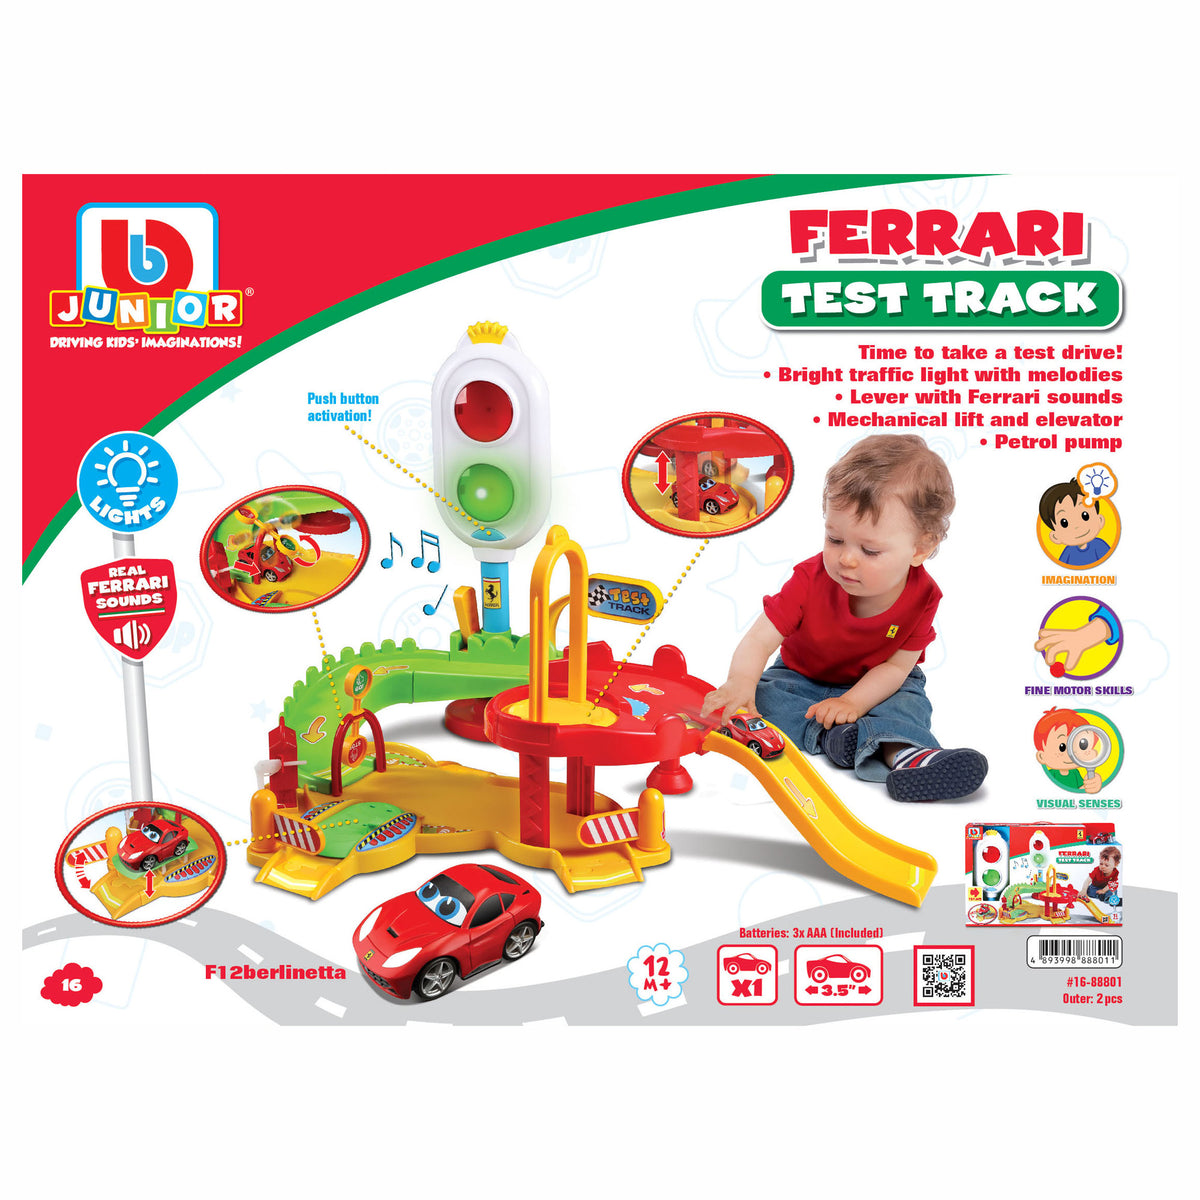 BB Junior Play & Go Ferrari Test Track